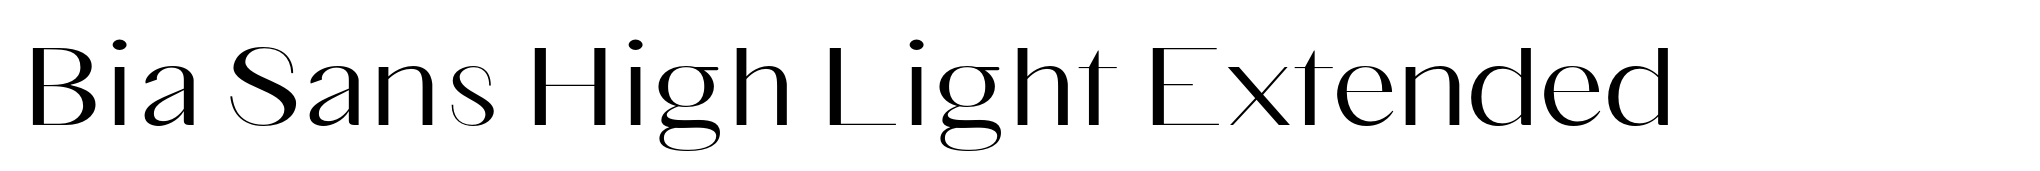 Bia Sans High Light Extended image